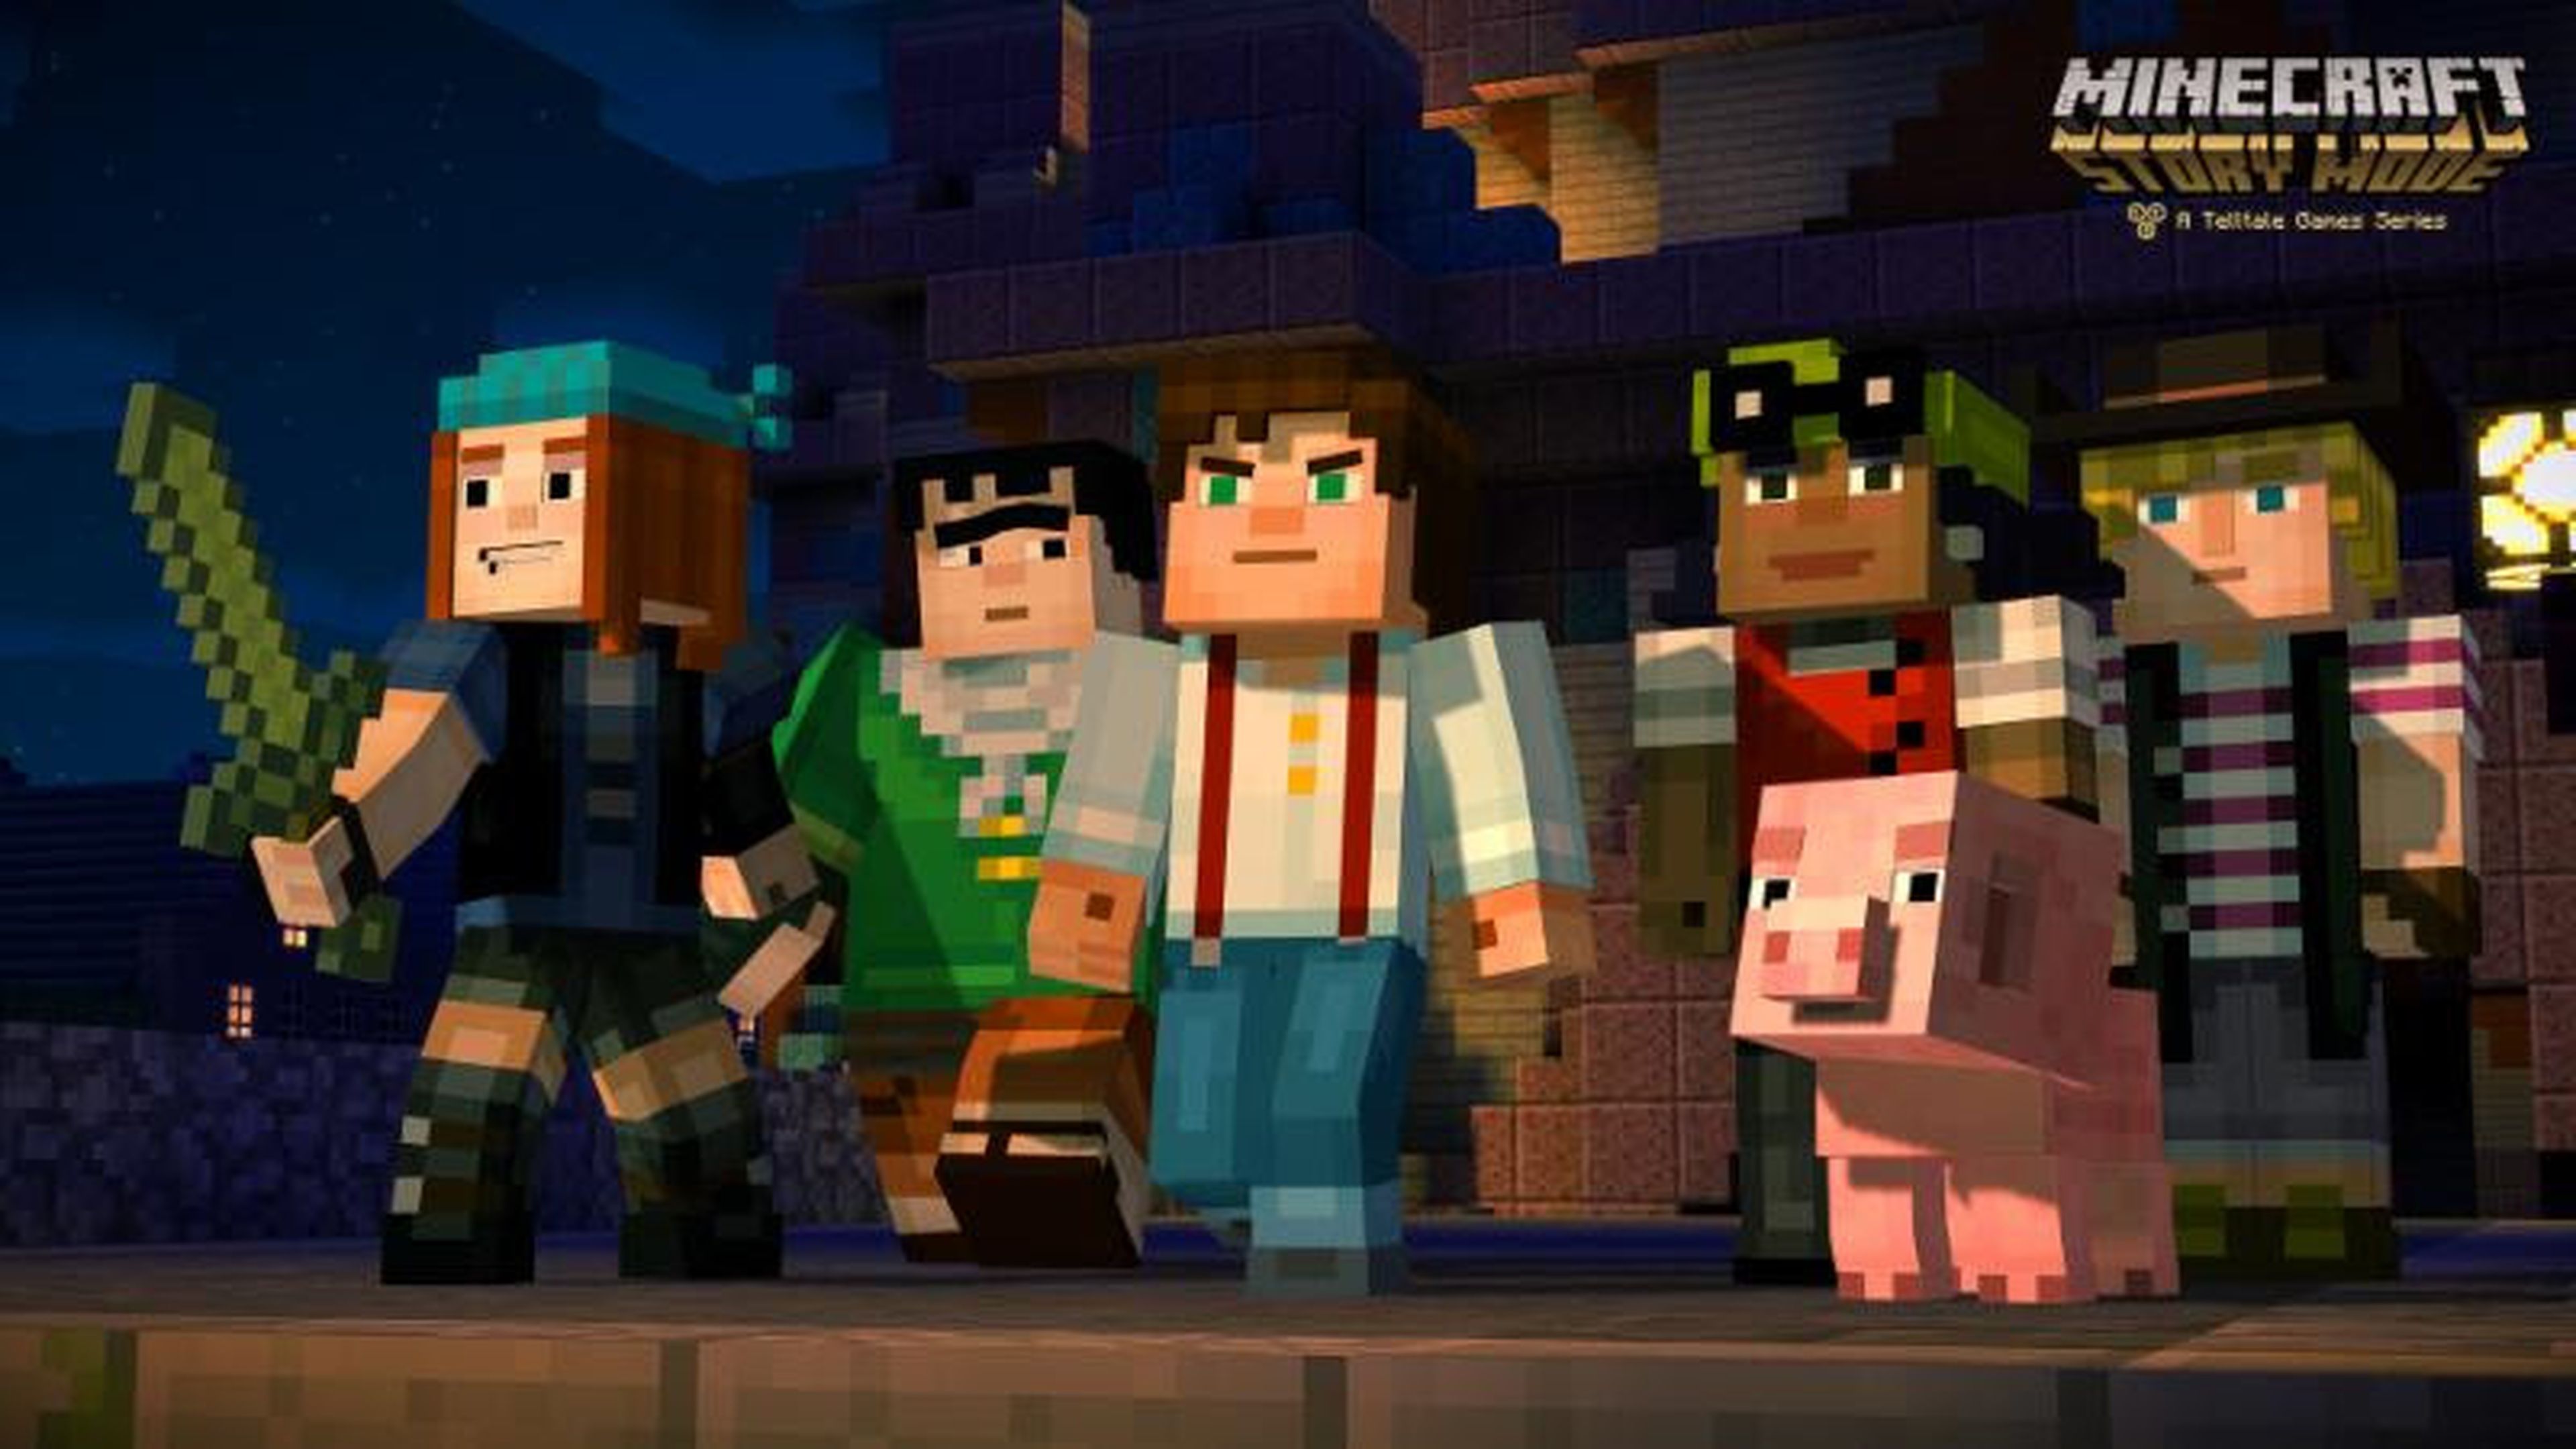 Minecraft: Story Mode nos presenta sus primeros detalles